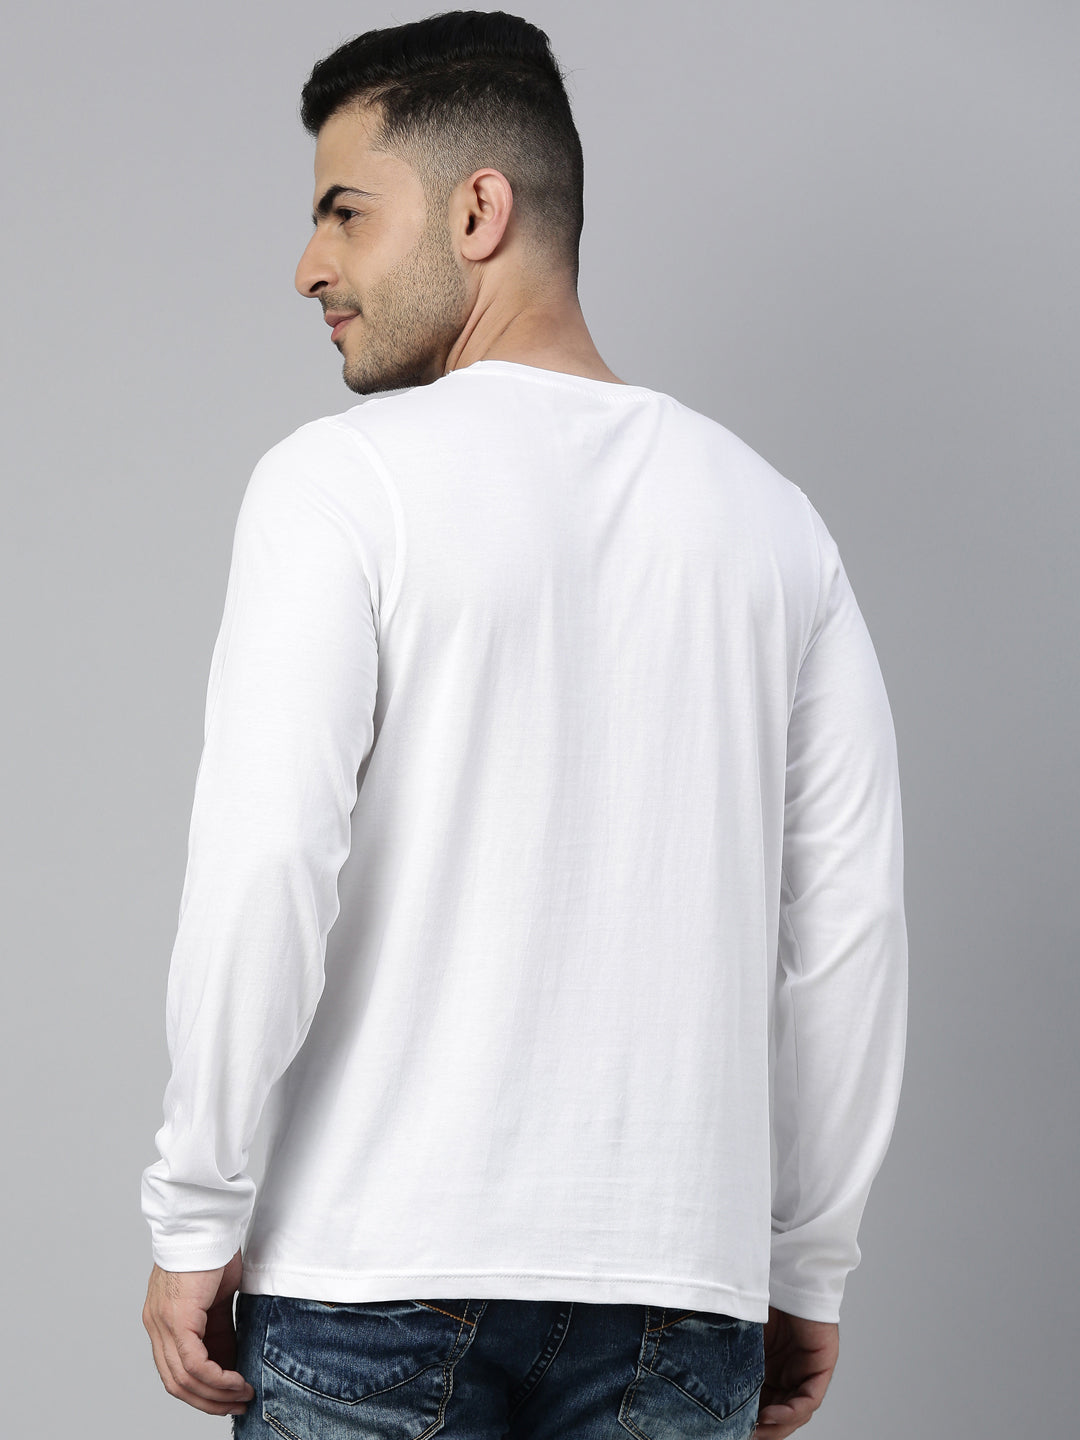 Get Out & Explore White Full Sleeves T Shirt Full Sleeves Bushirt   